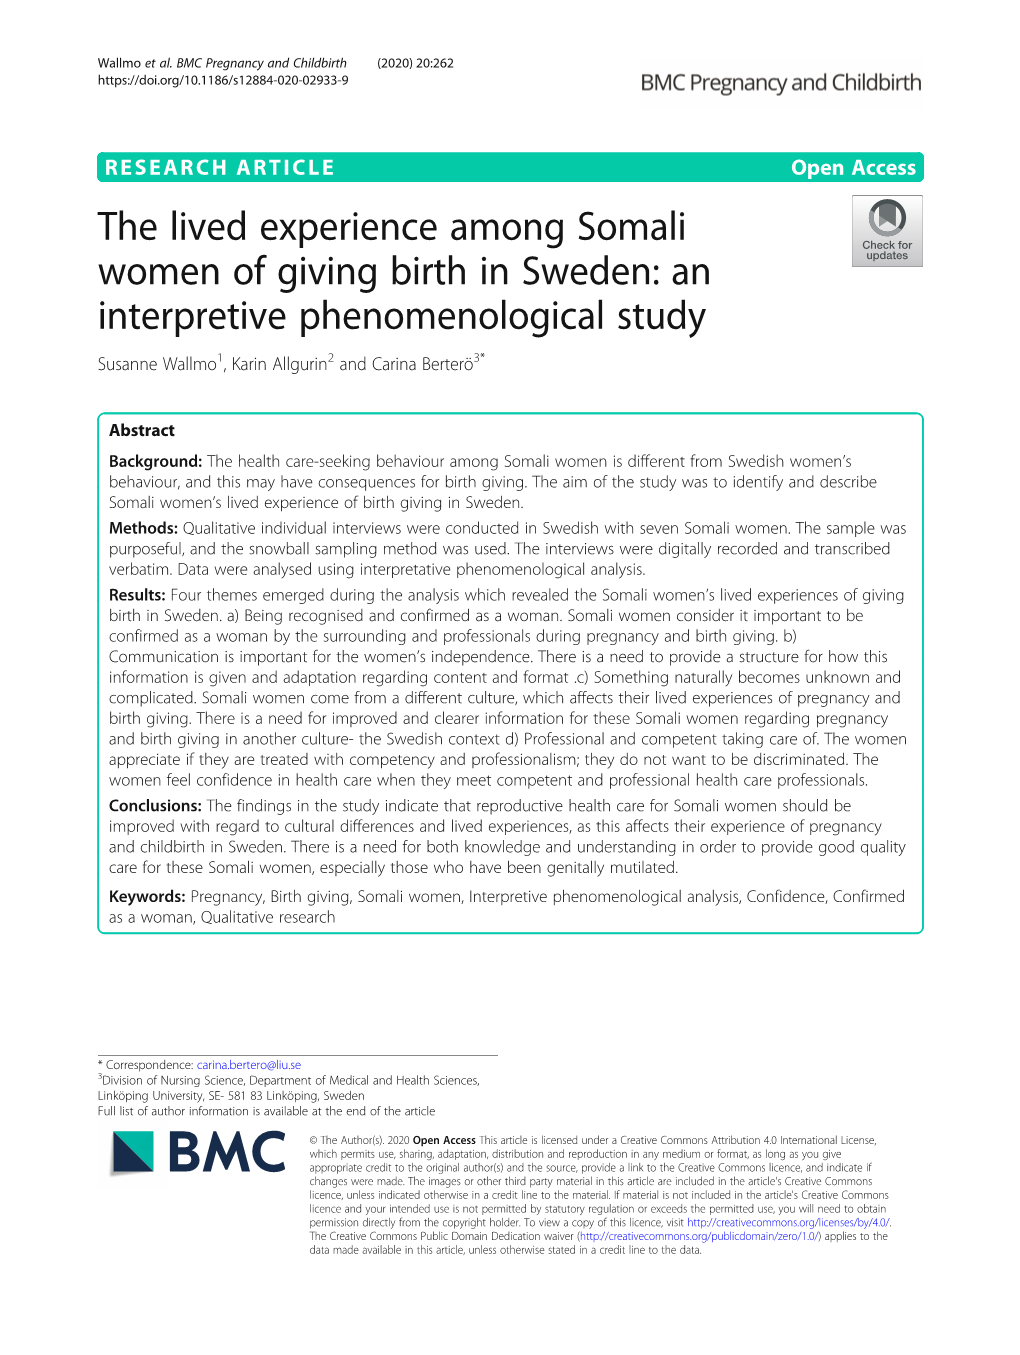 The Lived Experience Among Somali Women of Giving Birth in Sweden: an Interpretive Phenomenological Study Susanne Wallmo1, Karin Allgurin2 and Carina Berterö3*